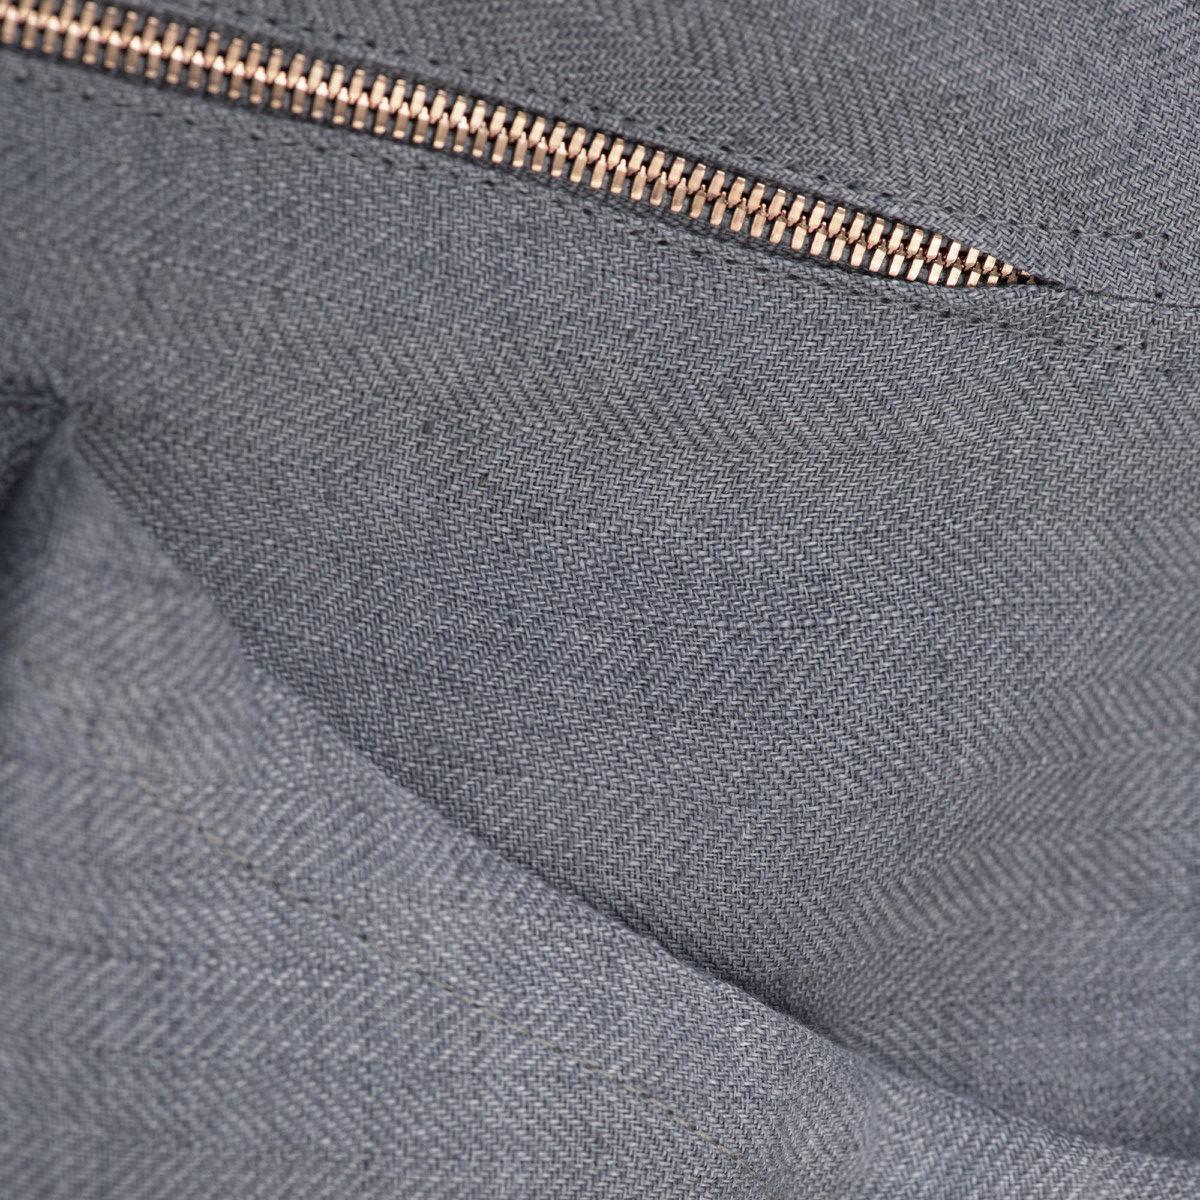 Short linen pants with zip for Woman dark grey color details 100% Capri